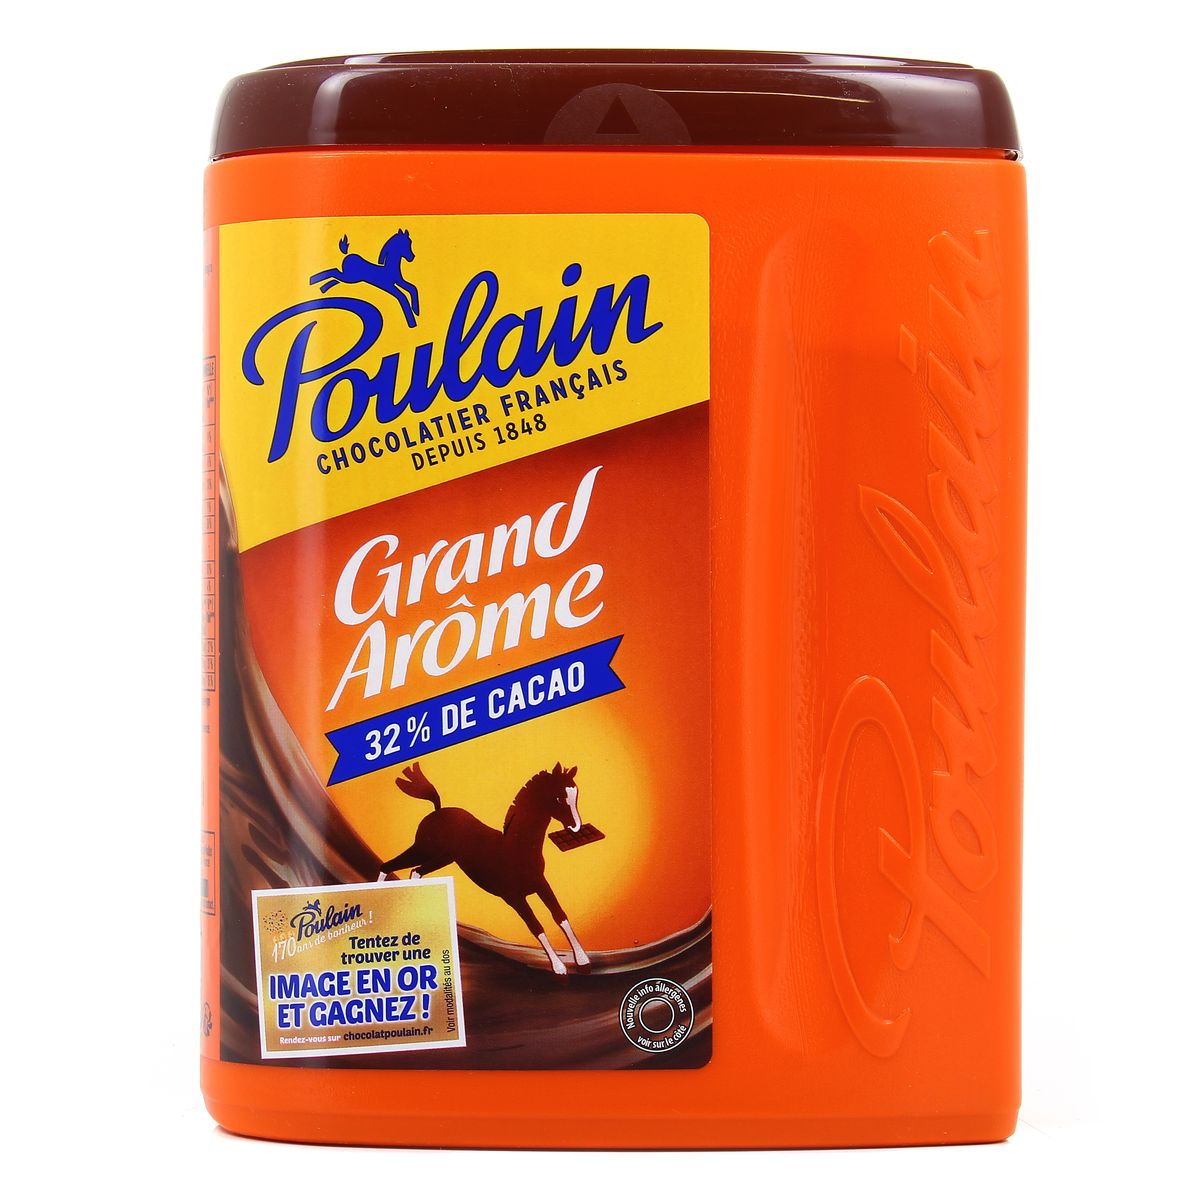 Chocolate Powder Grand Arôme - Poulain